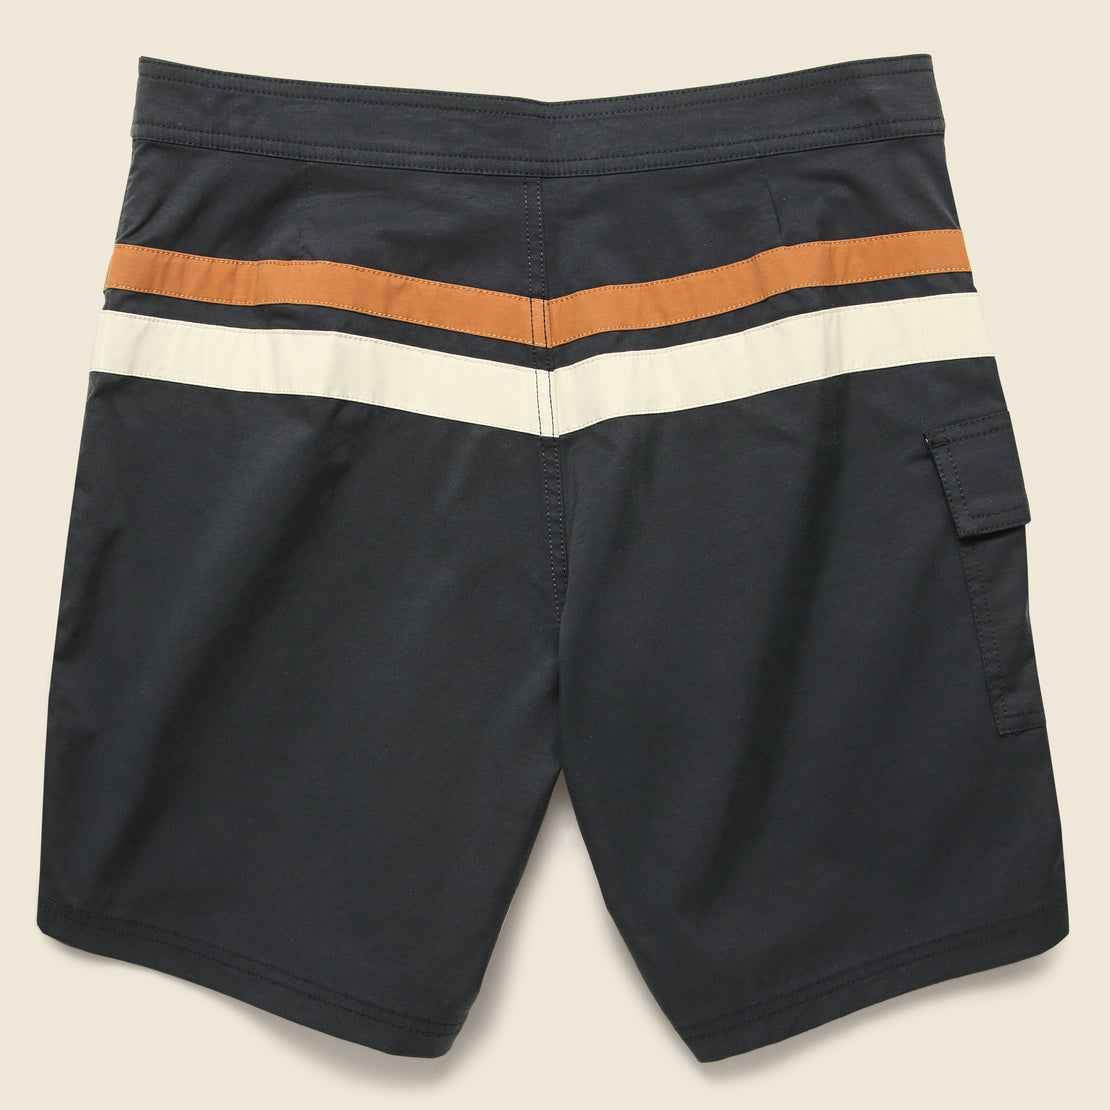 Porto Boardshort - Black Wash - Katin - STAG Provisions - Shorts - Swim